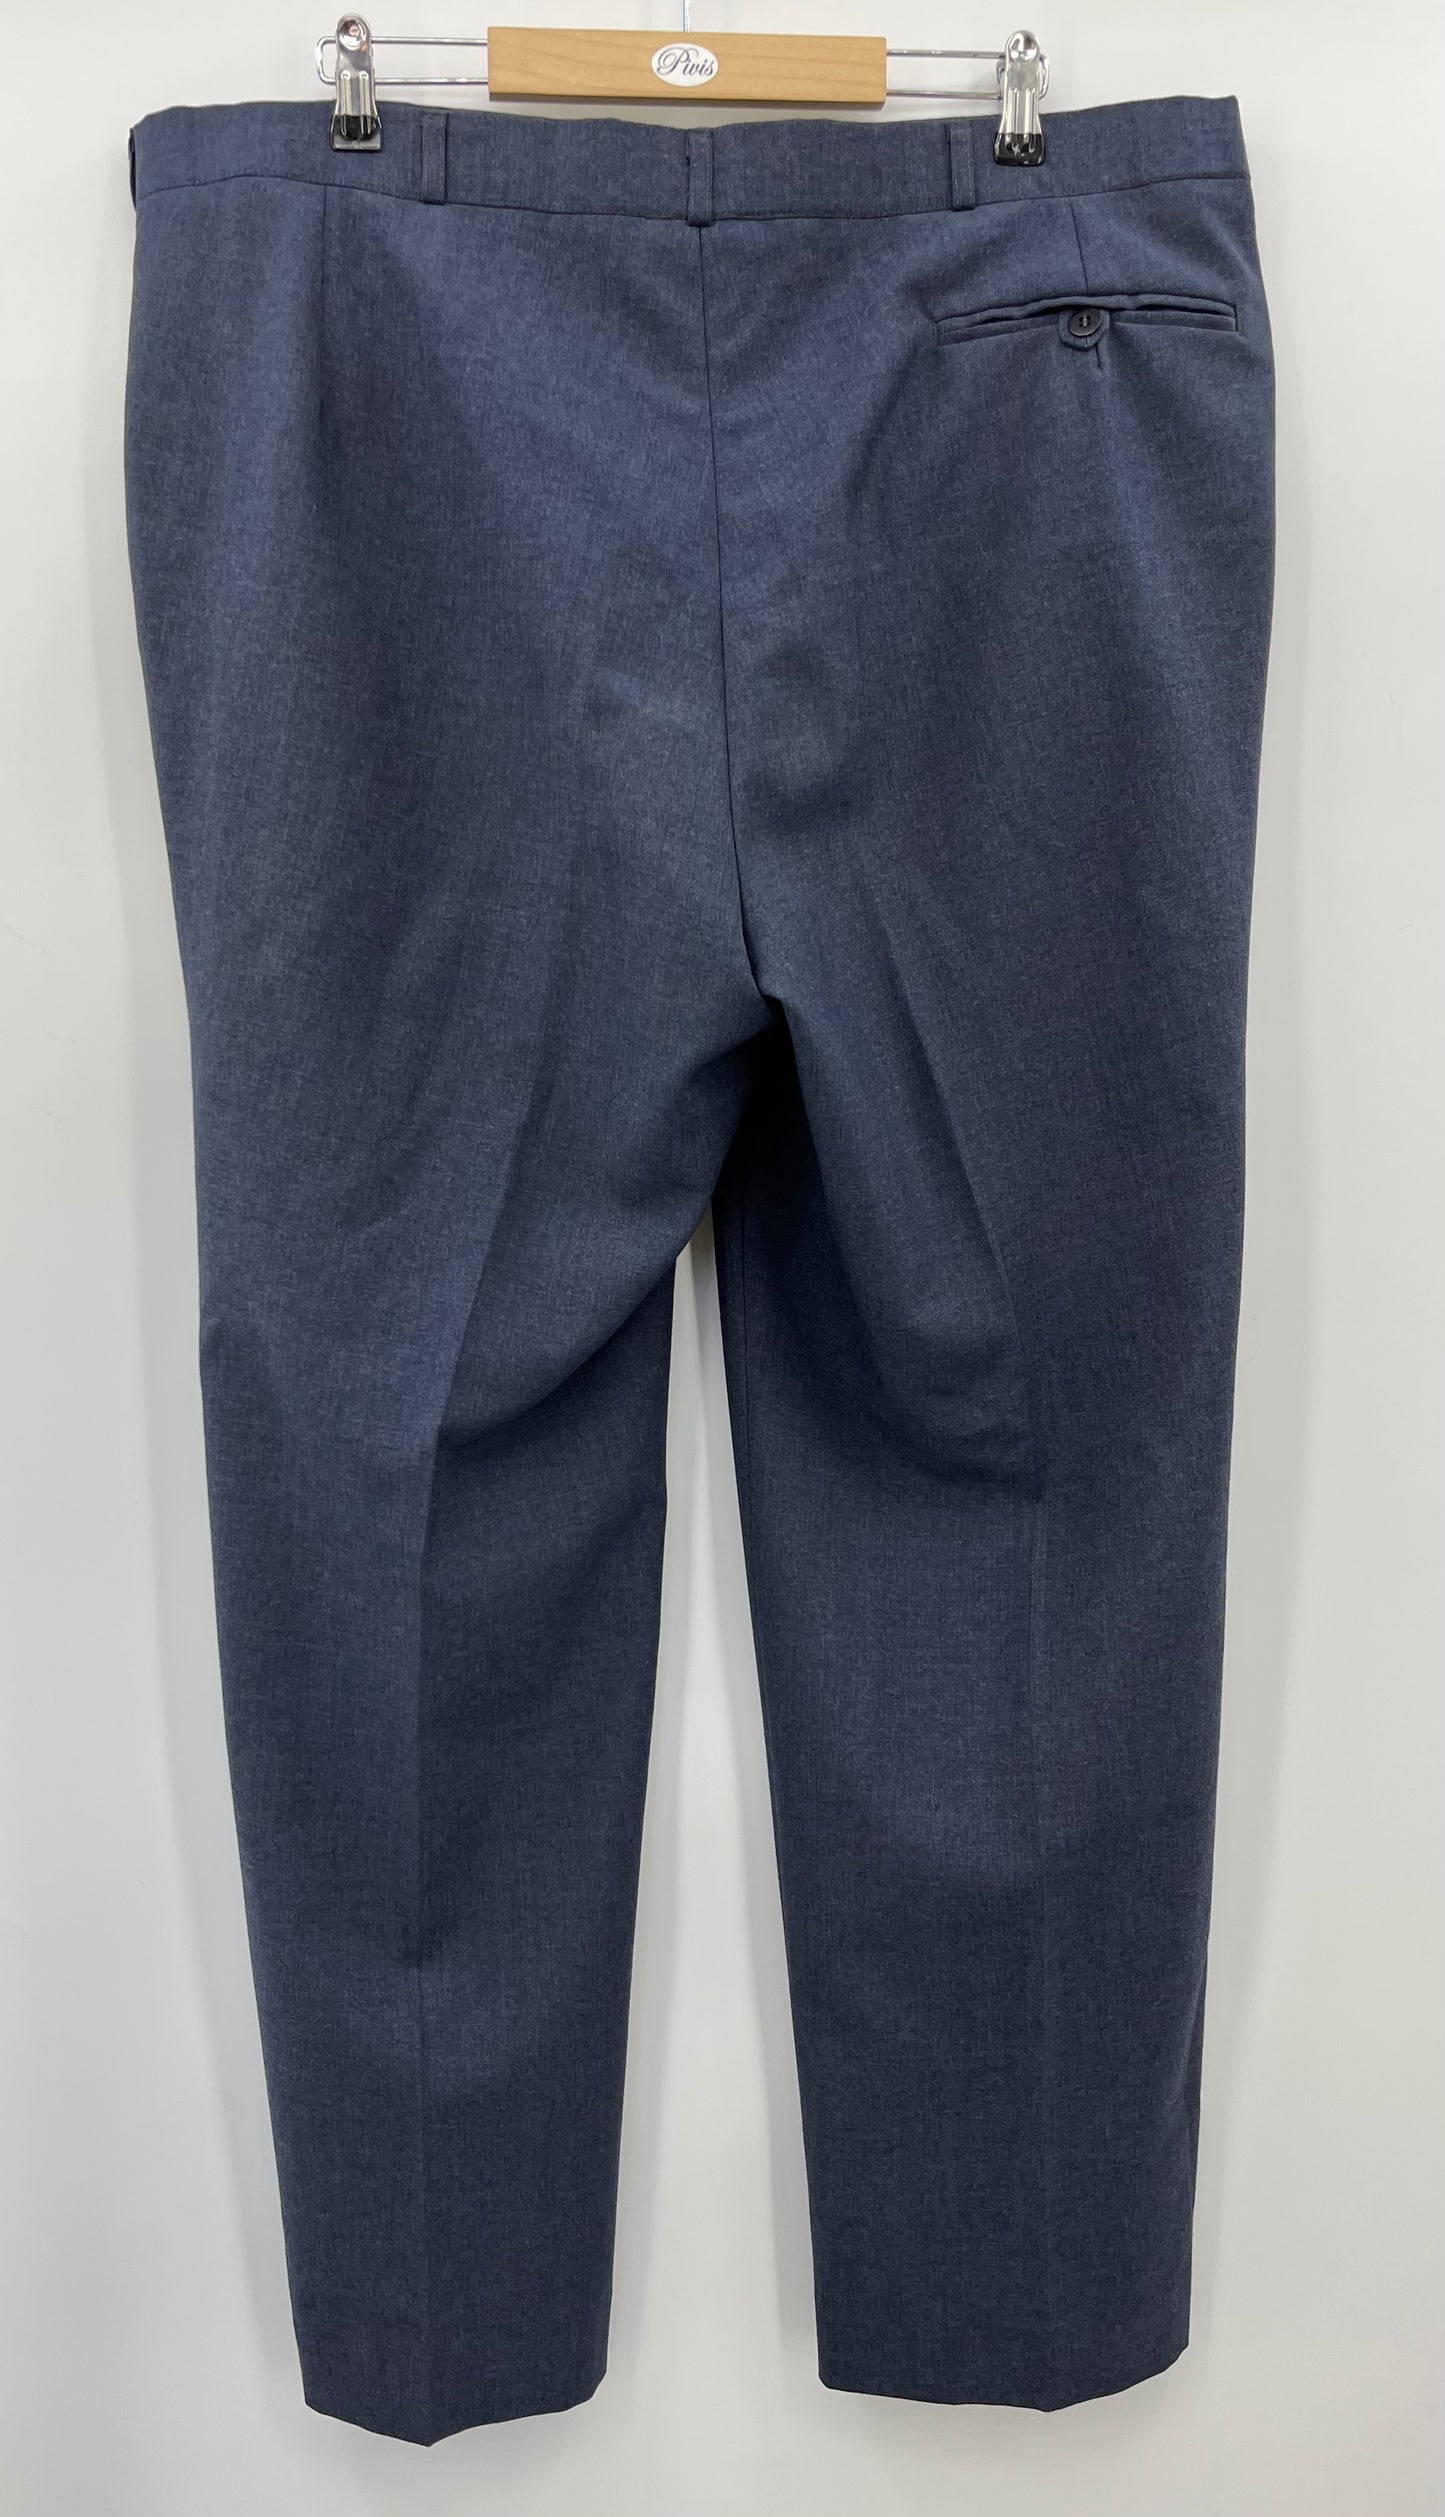 Lammervo, tummanharmaat miesten housut, 80-90-luku, vyöt.ymp. 106cm